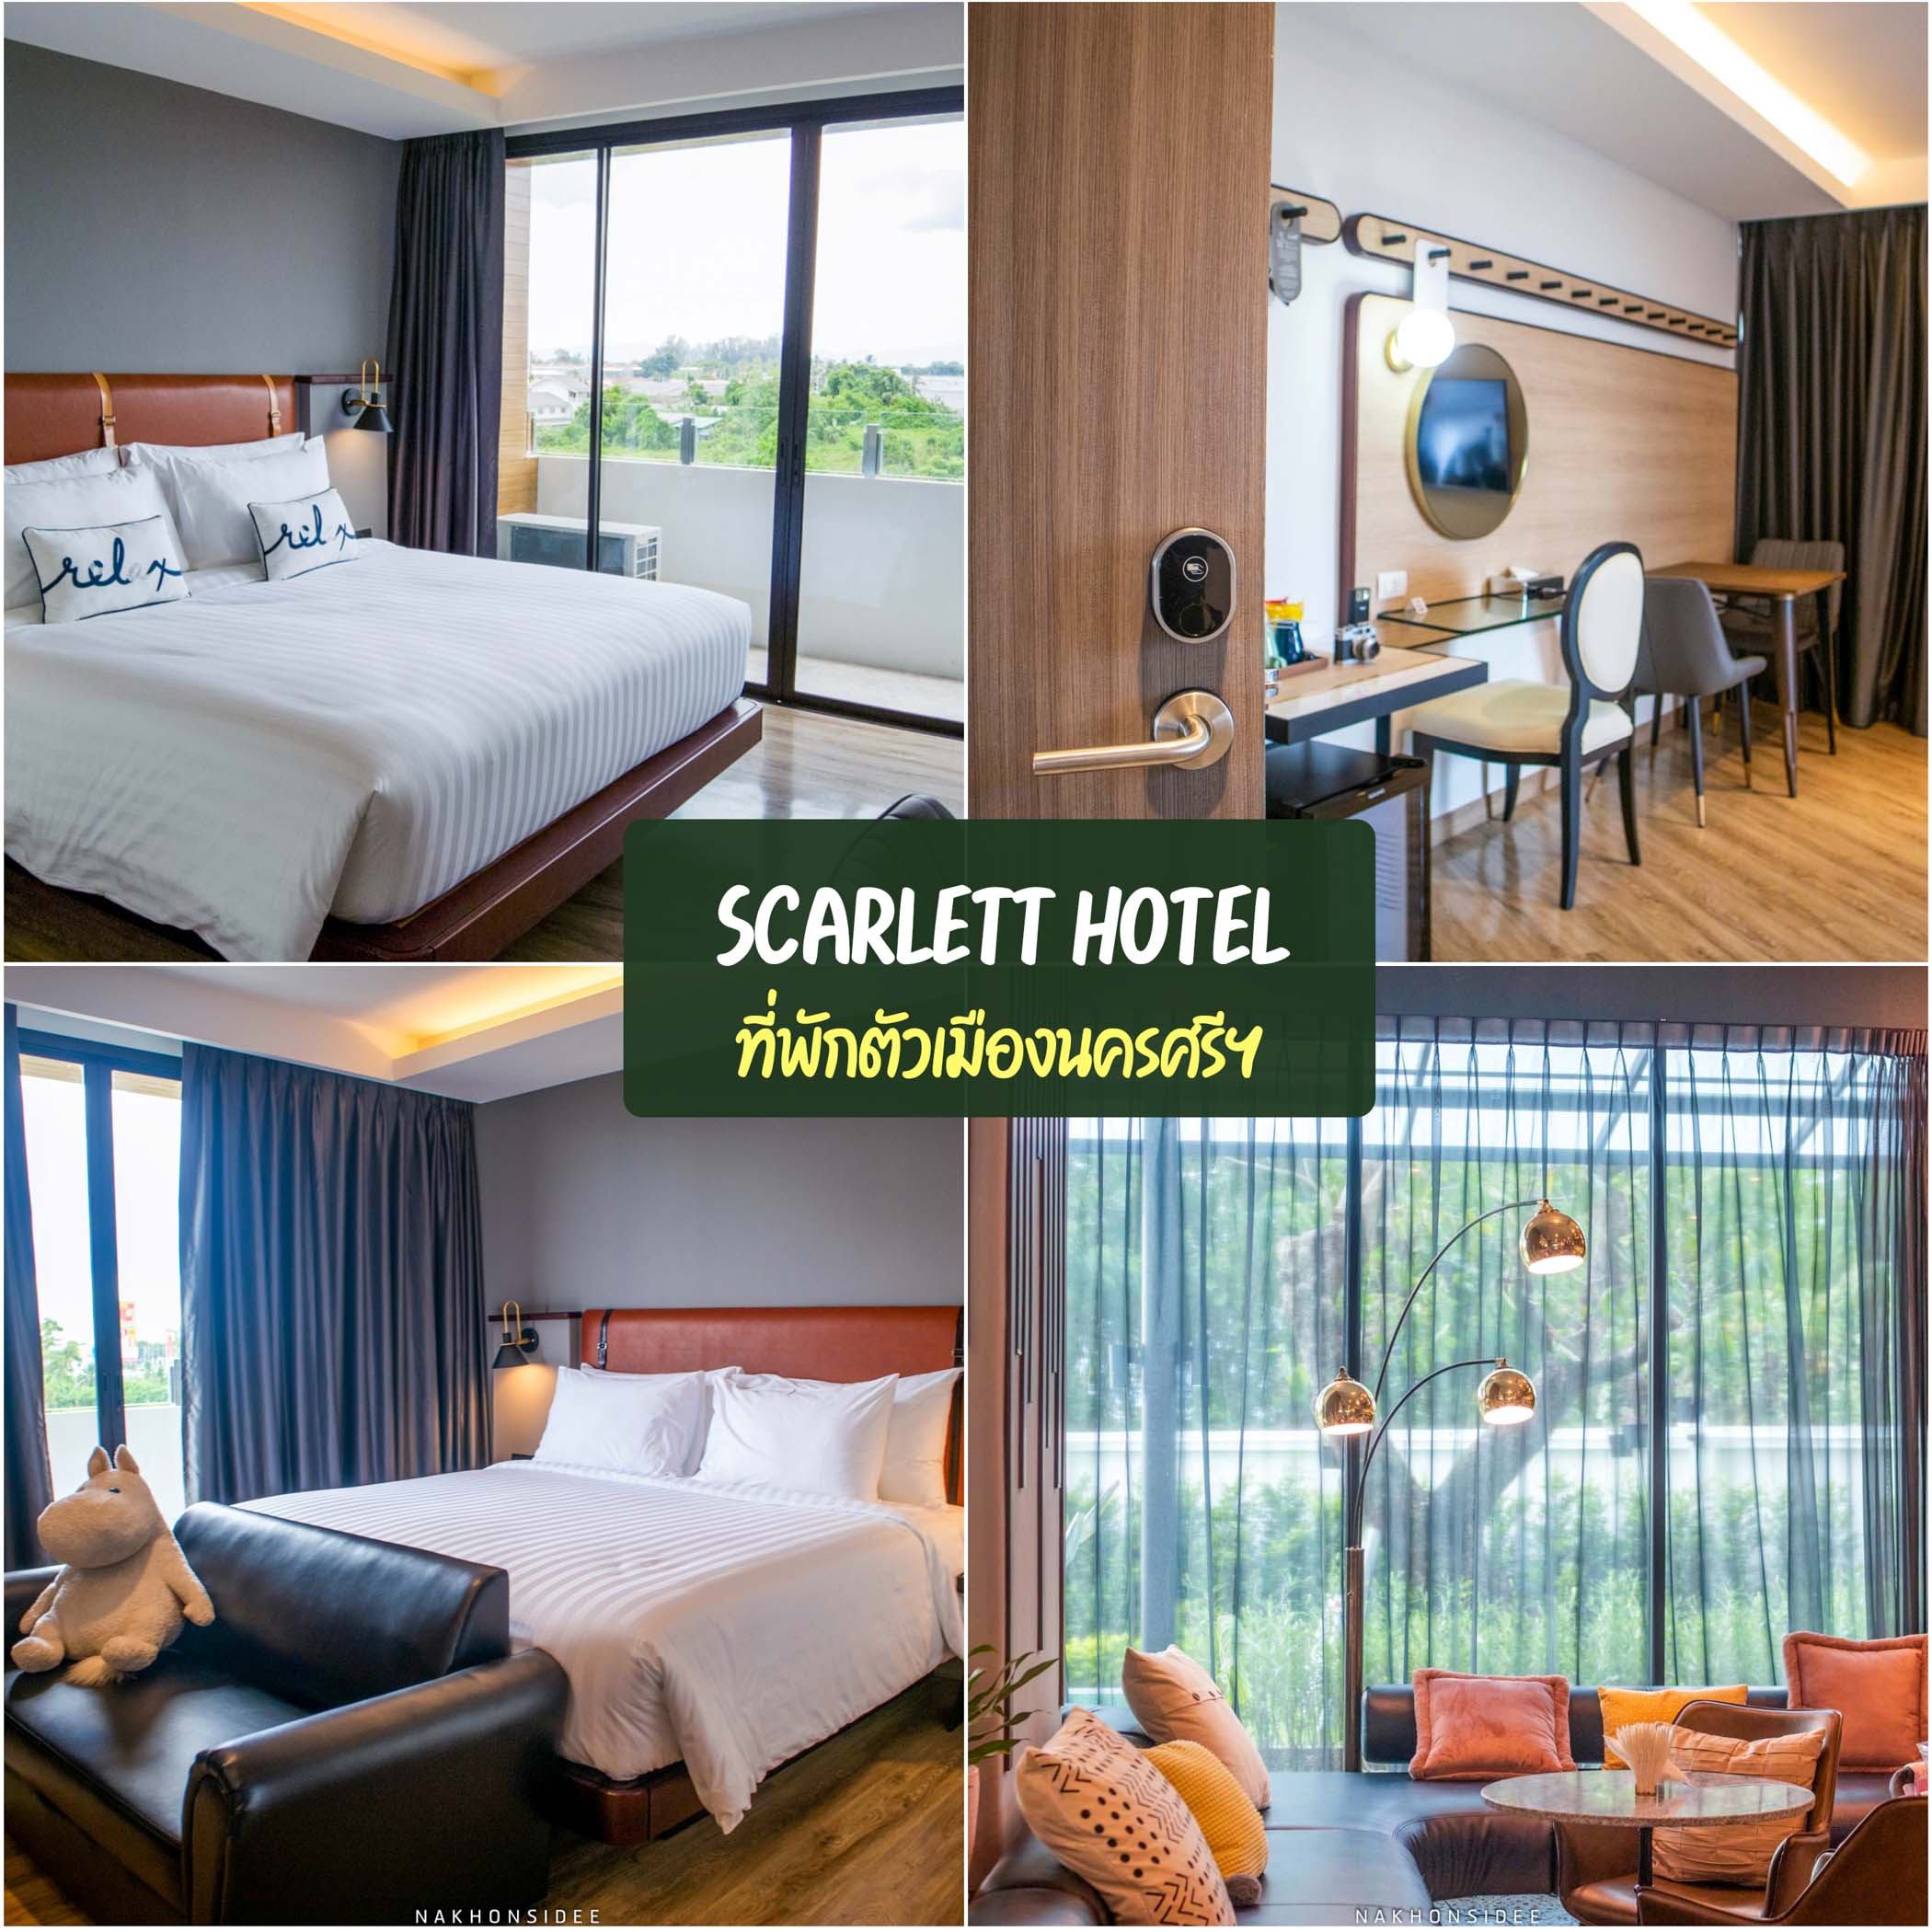 Scarlett-Hotel-นครศรีธรรมราช โรงแรมสการ์เลท-โฮเทล-ที่พักนครศรีธรรมราช-ใจกลางเมืองเปิดใหม่ล่าสุด-สวยหรู-มีคาเฟ่ด้วยนั่งชิวๆสบาย-ห้องพักสบายหลากหลายรูปแบบ-มีสระว่ายน้ำด้วยน้าา ที่พัก,นครศรีธรรมราช,วัดเจดีย์,ตาไข่,โรมแรม,รีสอร์ท,ธรรมชาติ,กลางเมือง,ห้องพัก,วิวหลักล้าน,คาเฟ่